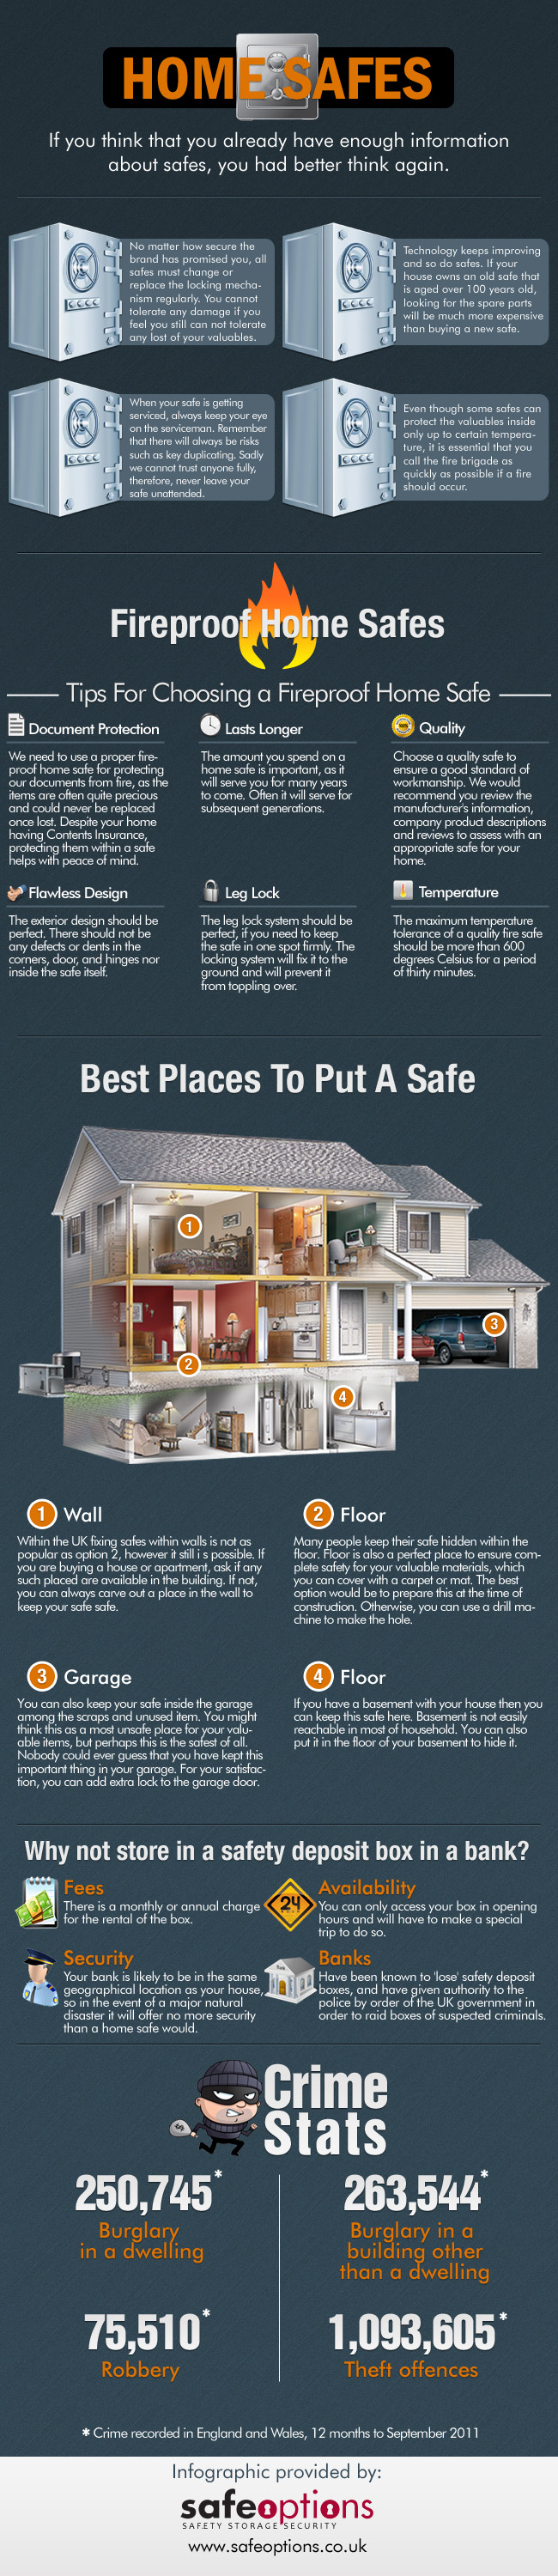 http://www.safeoptions.co.uk/blog/wp-content/uploads/2012/02/Home-Safes-SafeOptions-Infographic.jpg